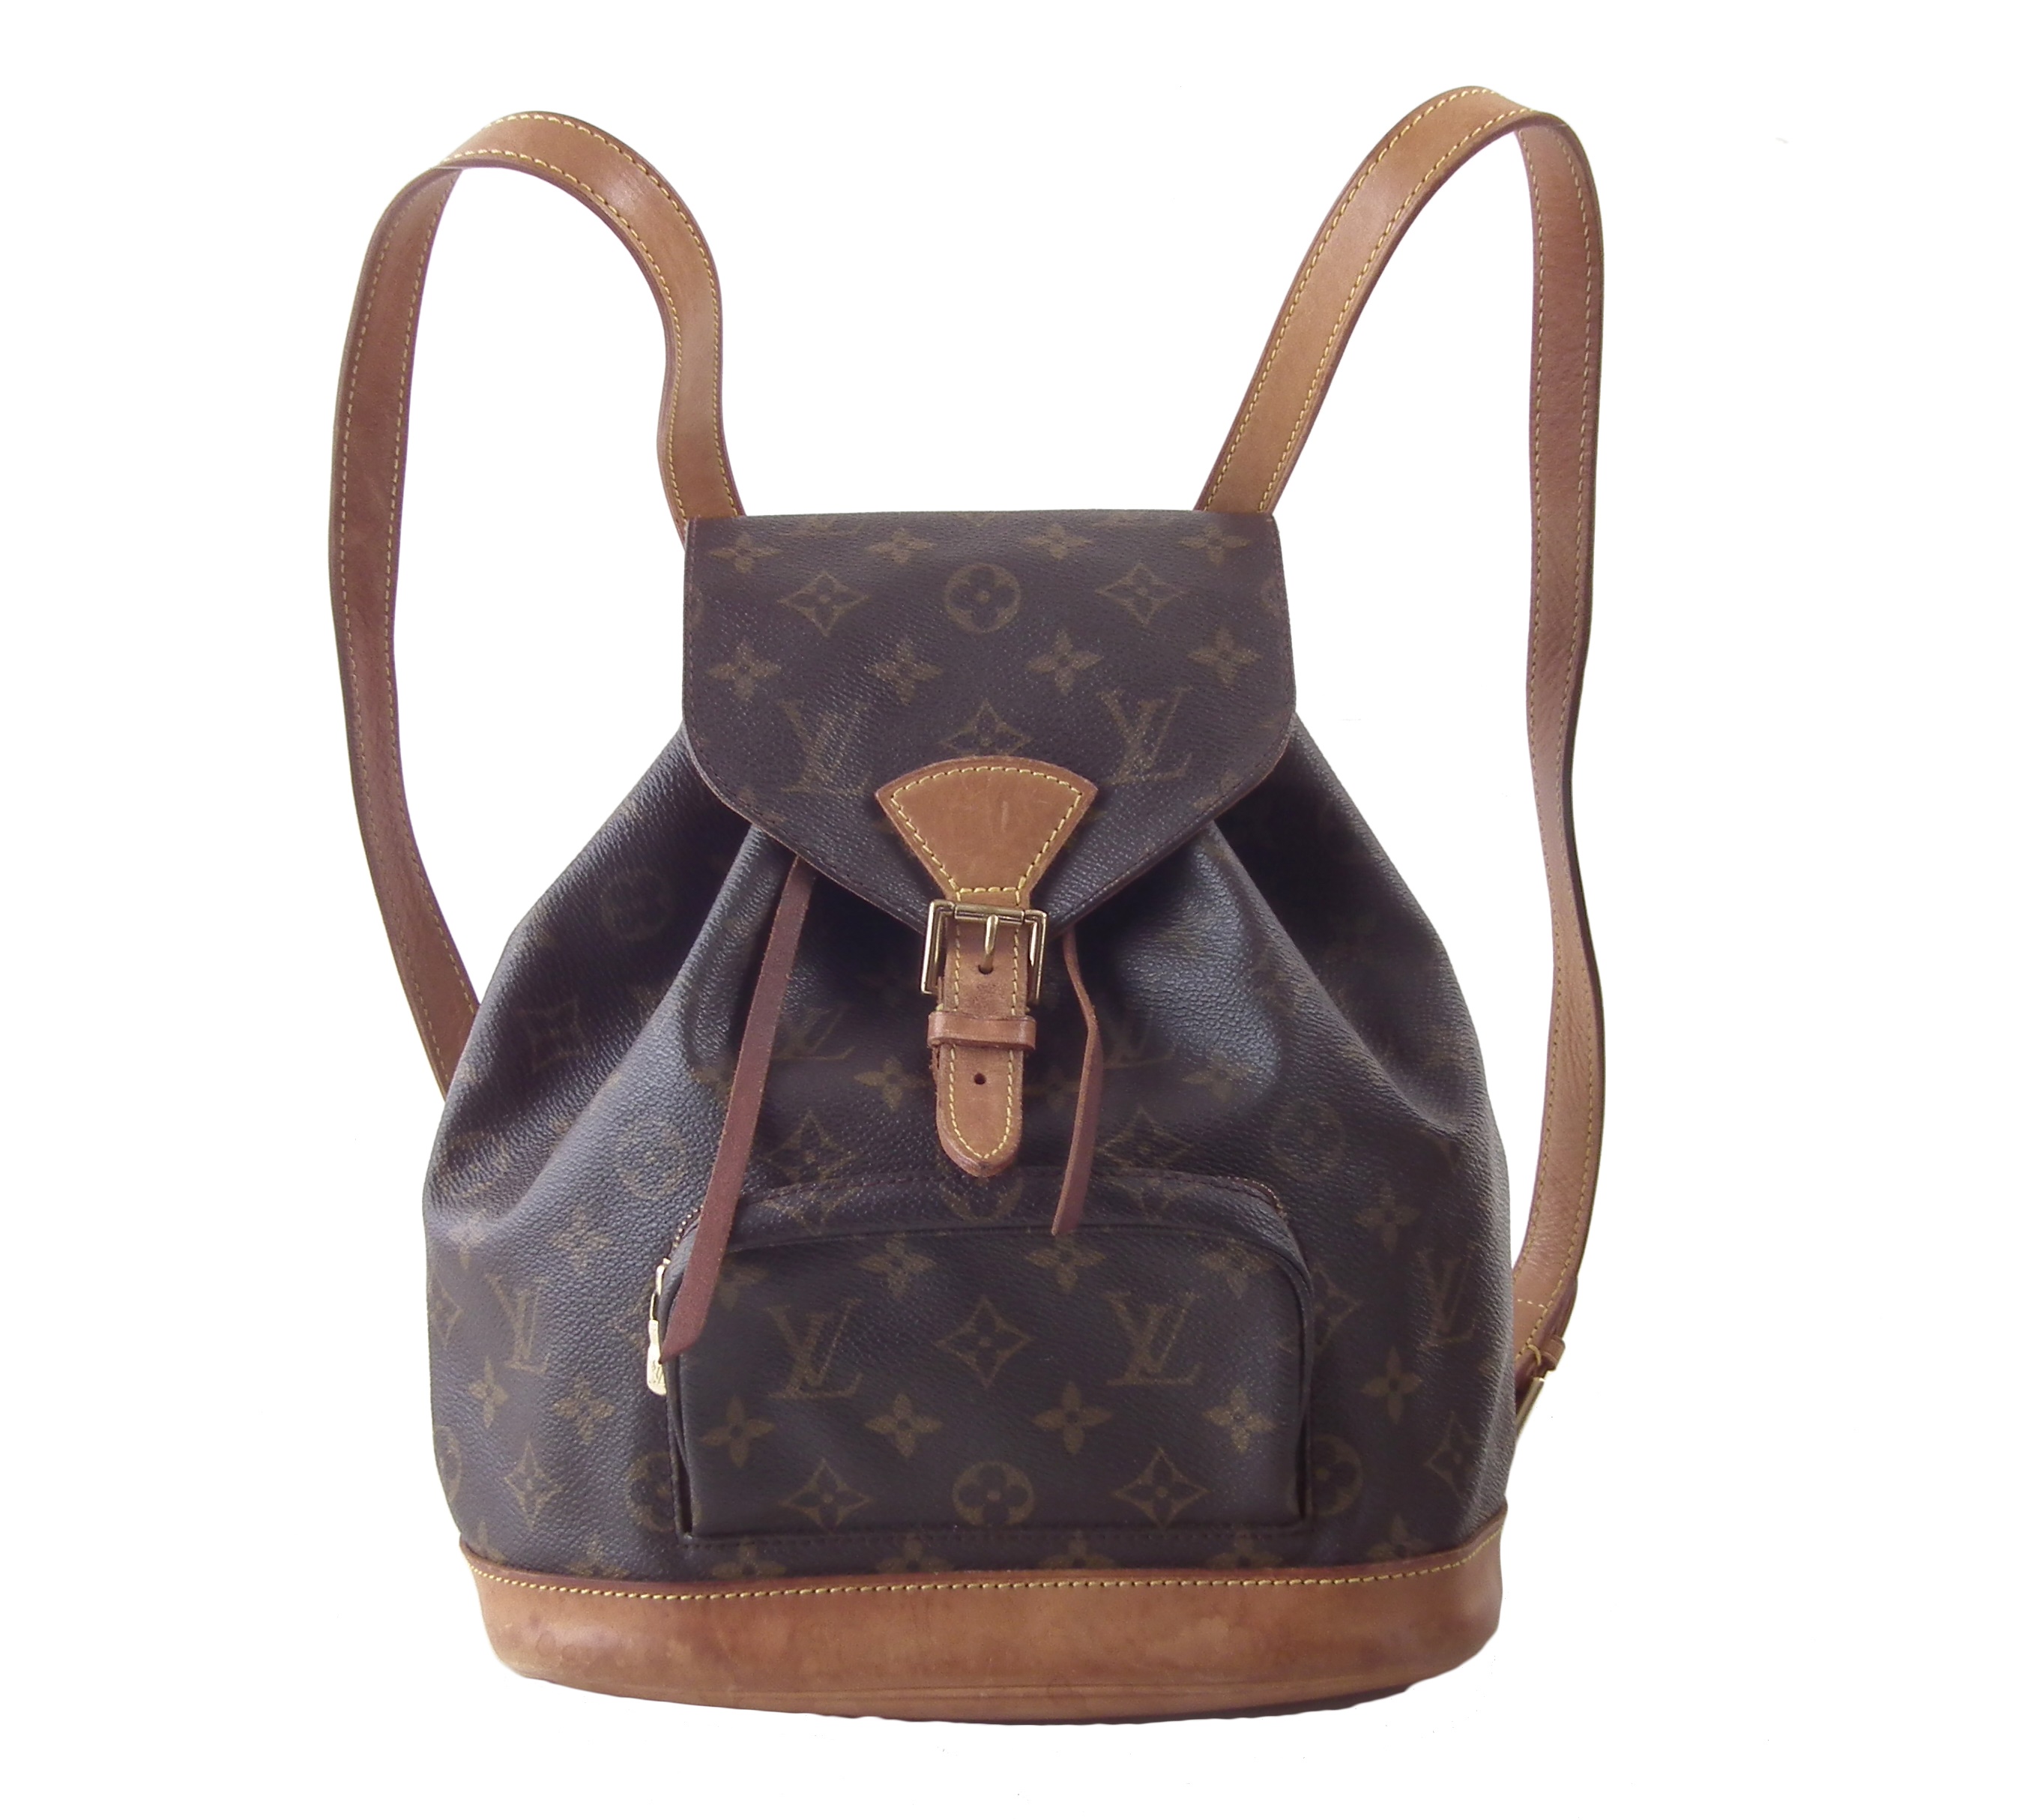 A Louis Vuitton Monogram Montsouris MM backpack